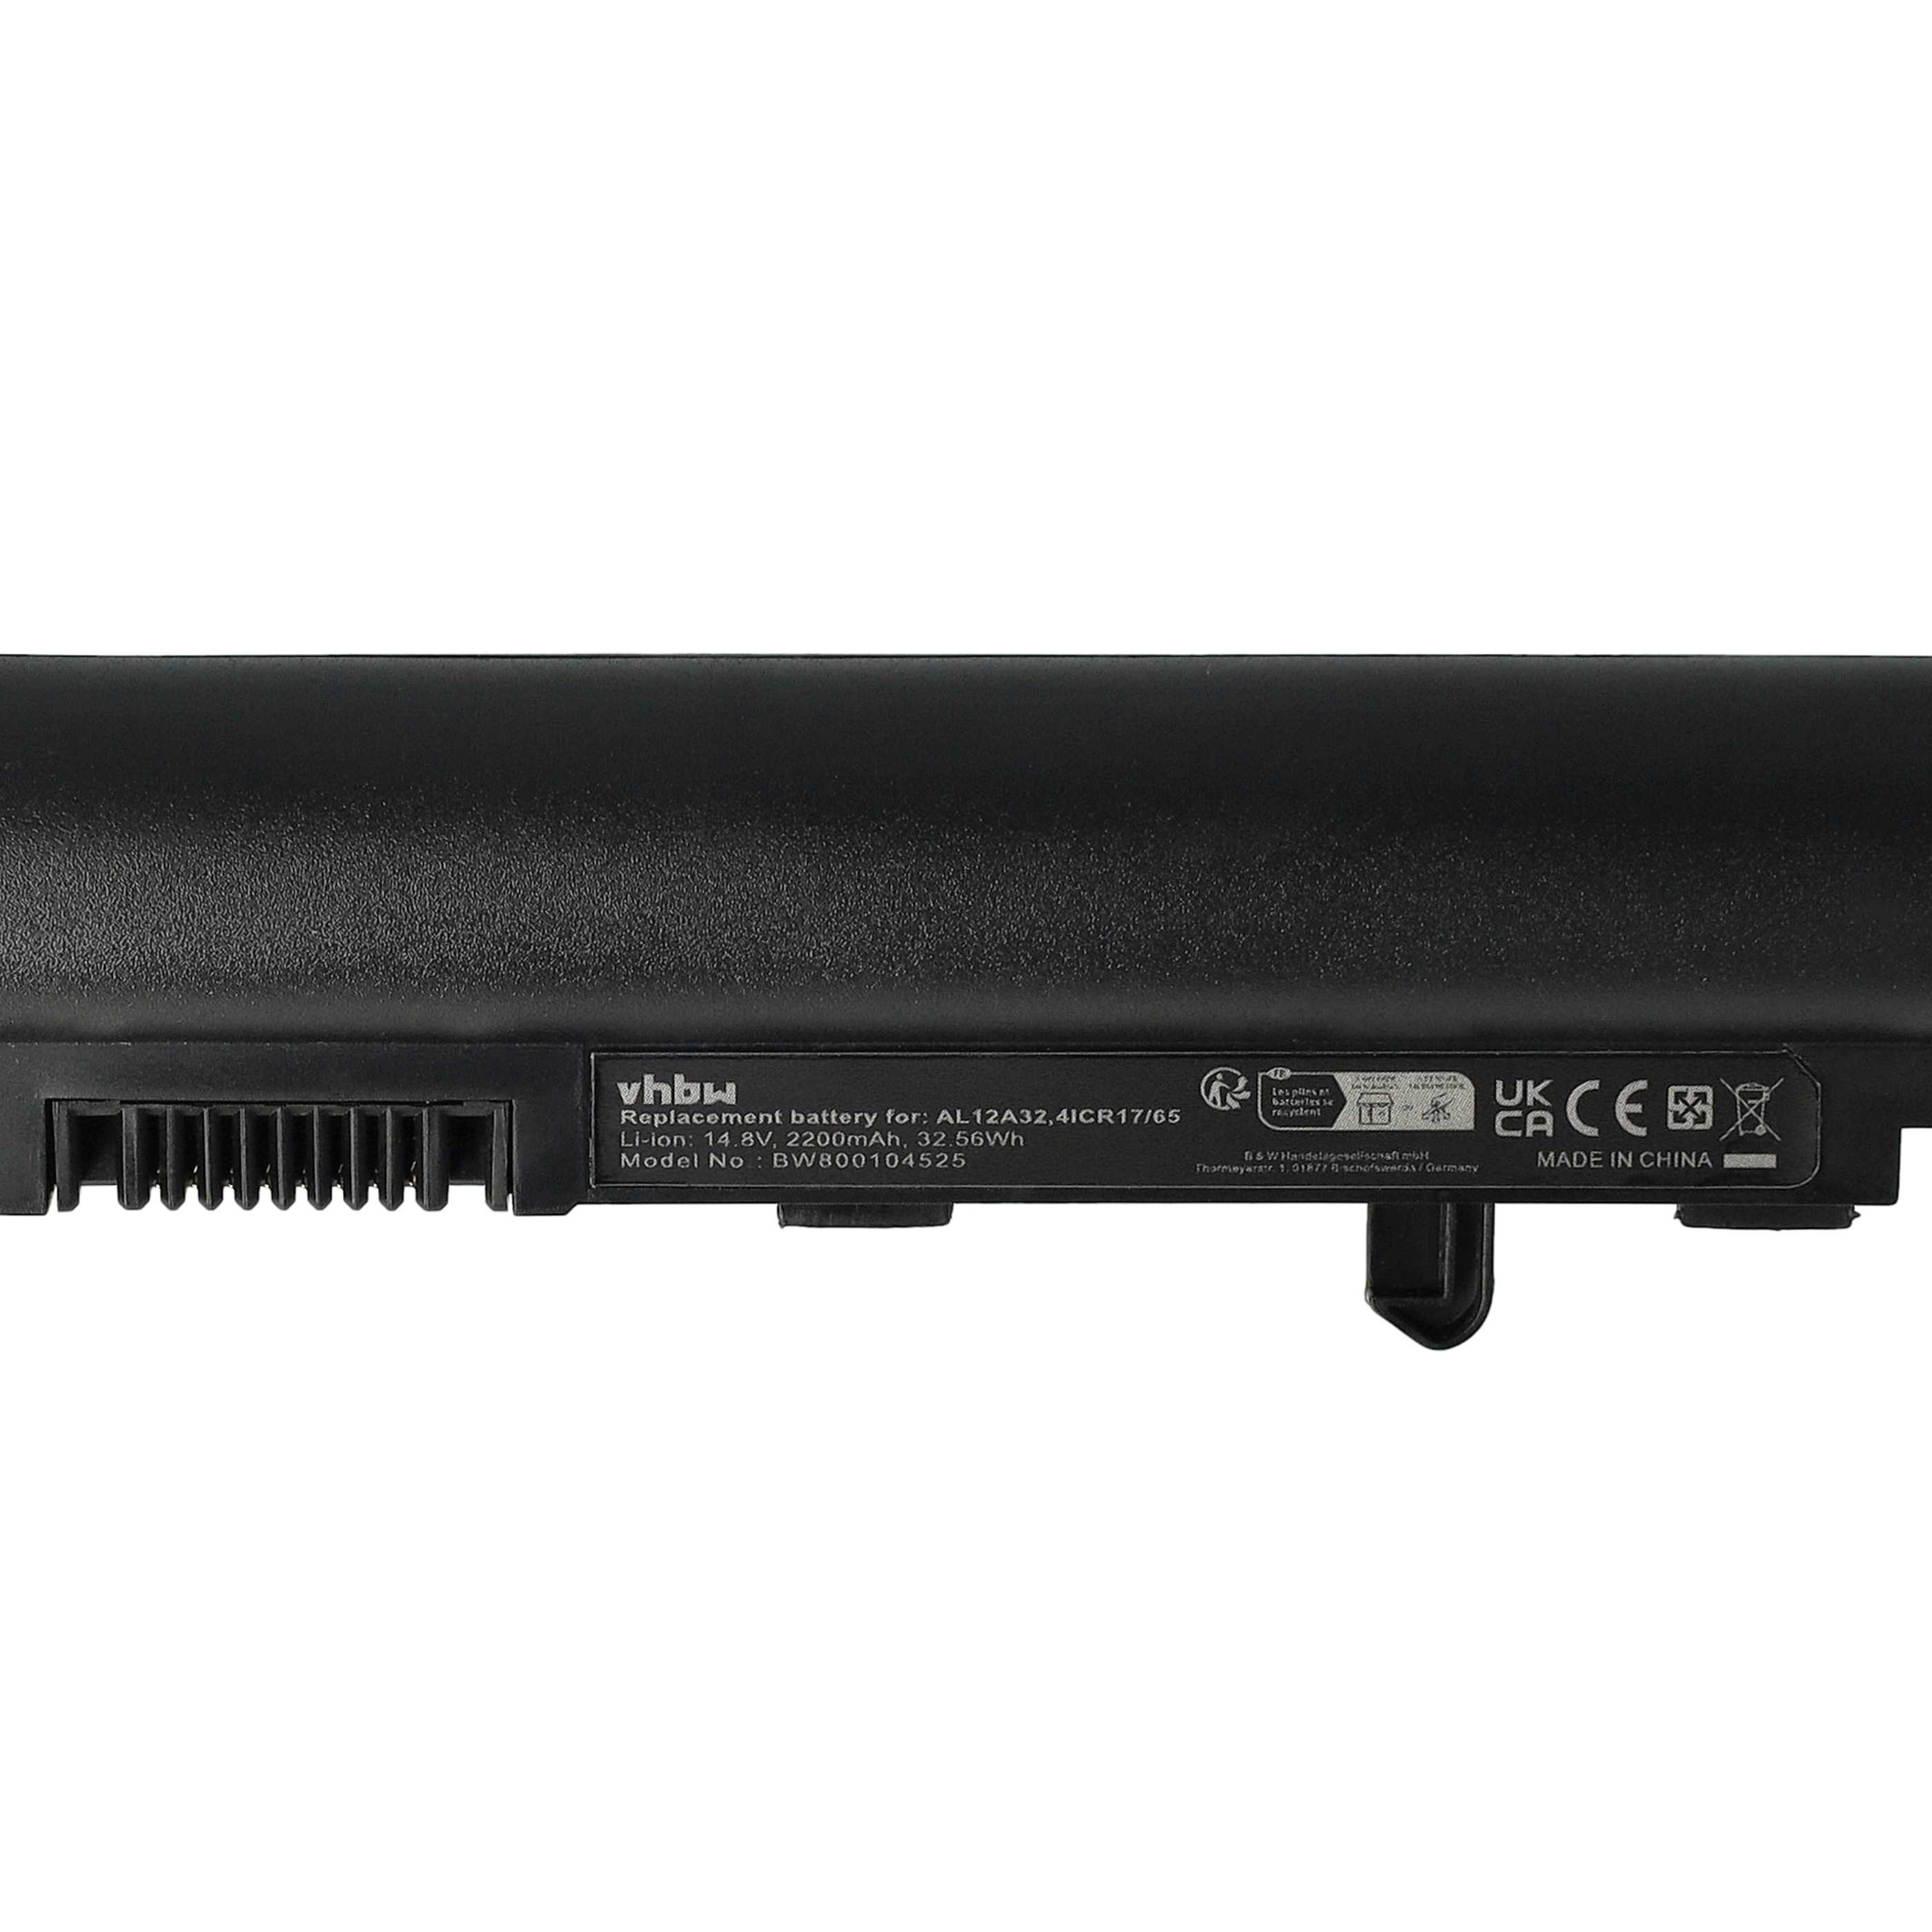 Batería reemplaza Acer AL12A32, 4ICR17/65, AK.004BT.097 para notebook Acer - 2200 mAh 14,4 V Li-Ion negro